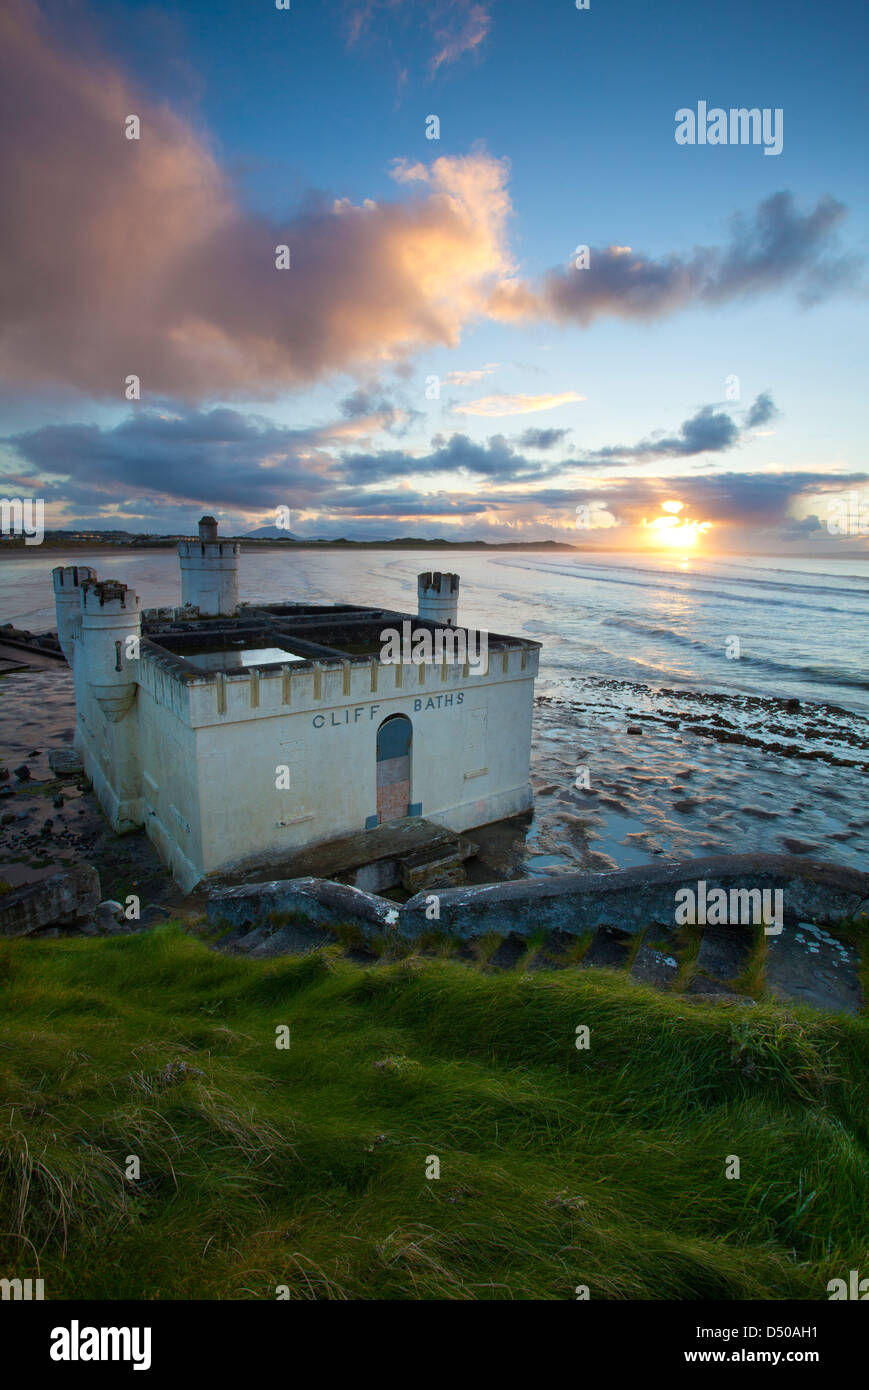 Sunset over the old seaweed baths, Enniscrone, County Sligo, Ireland. Stock Photo